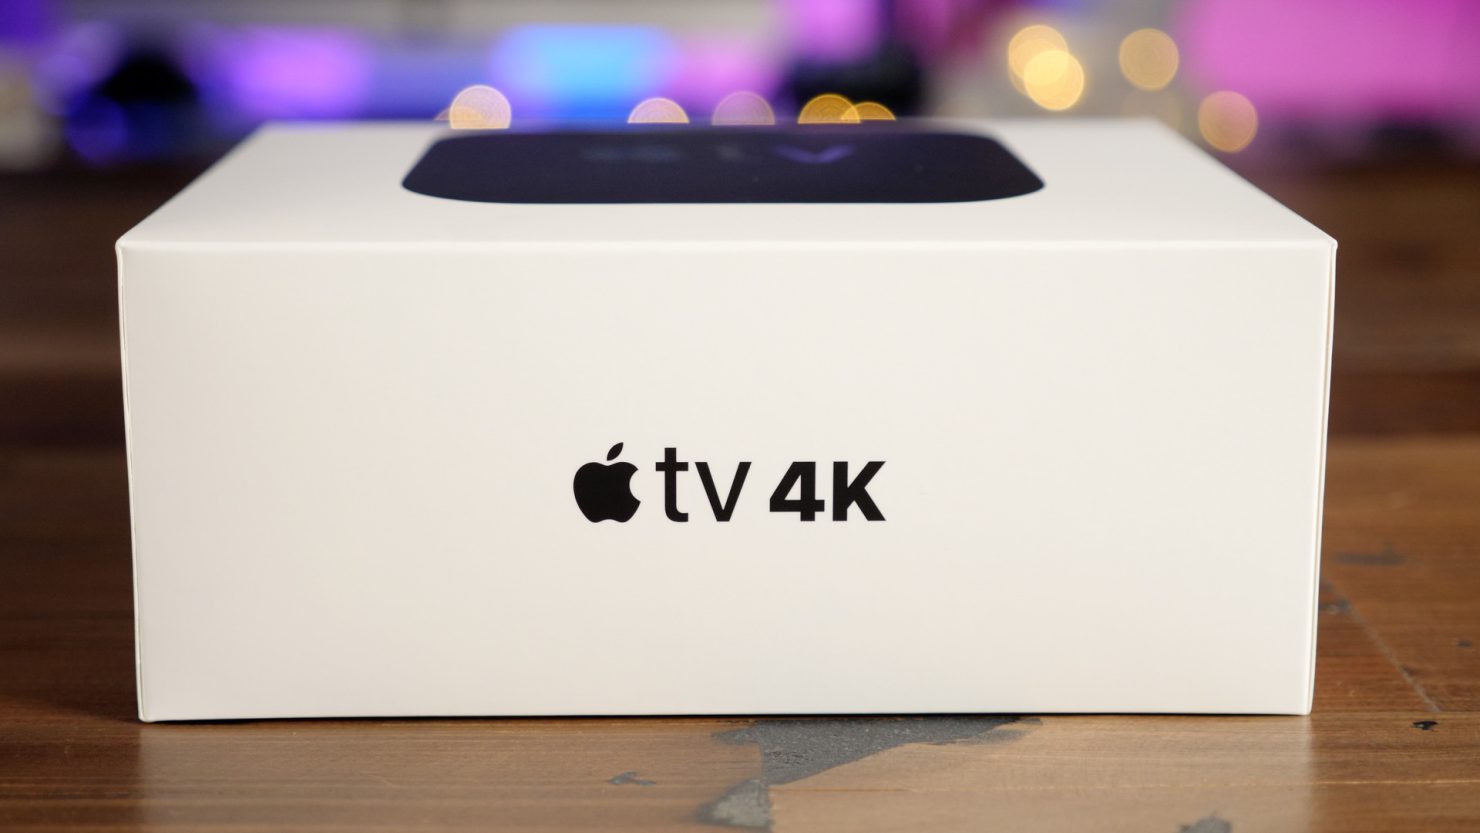 Apple TV 4K box pictured